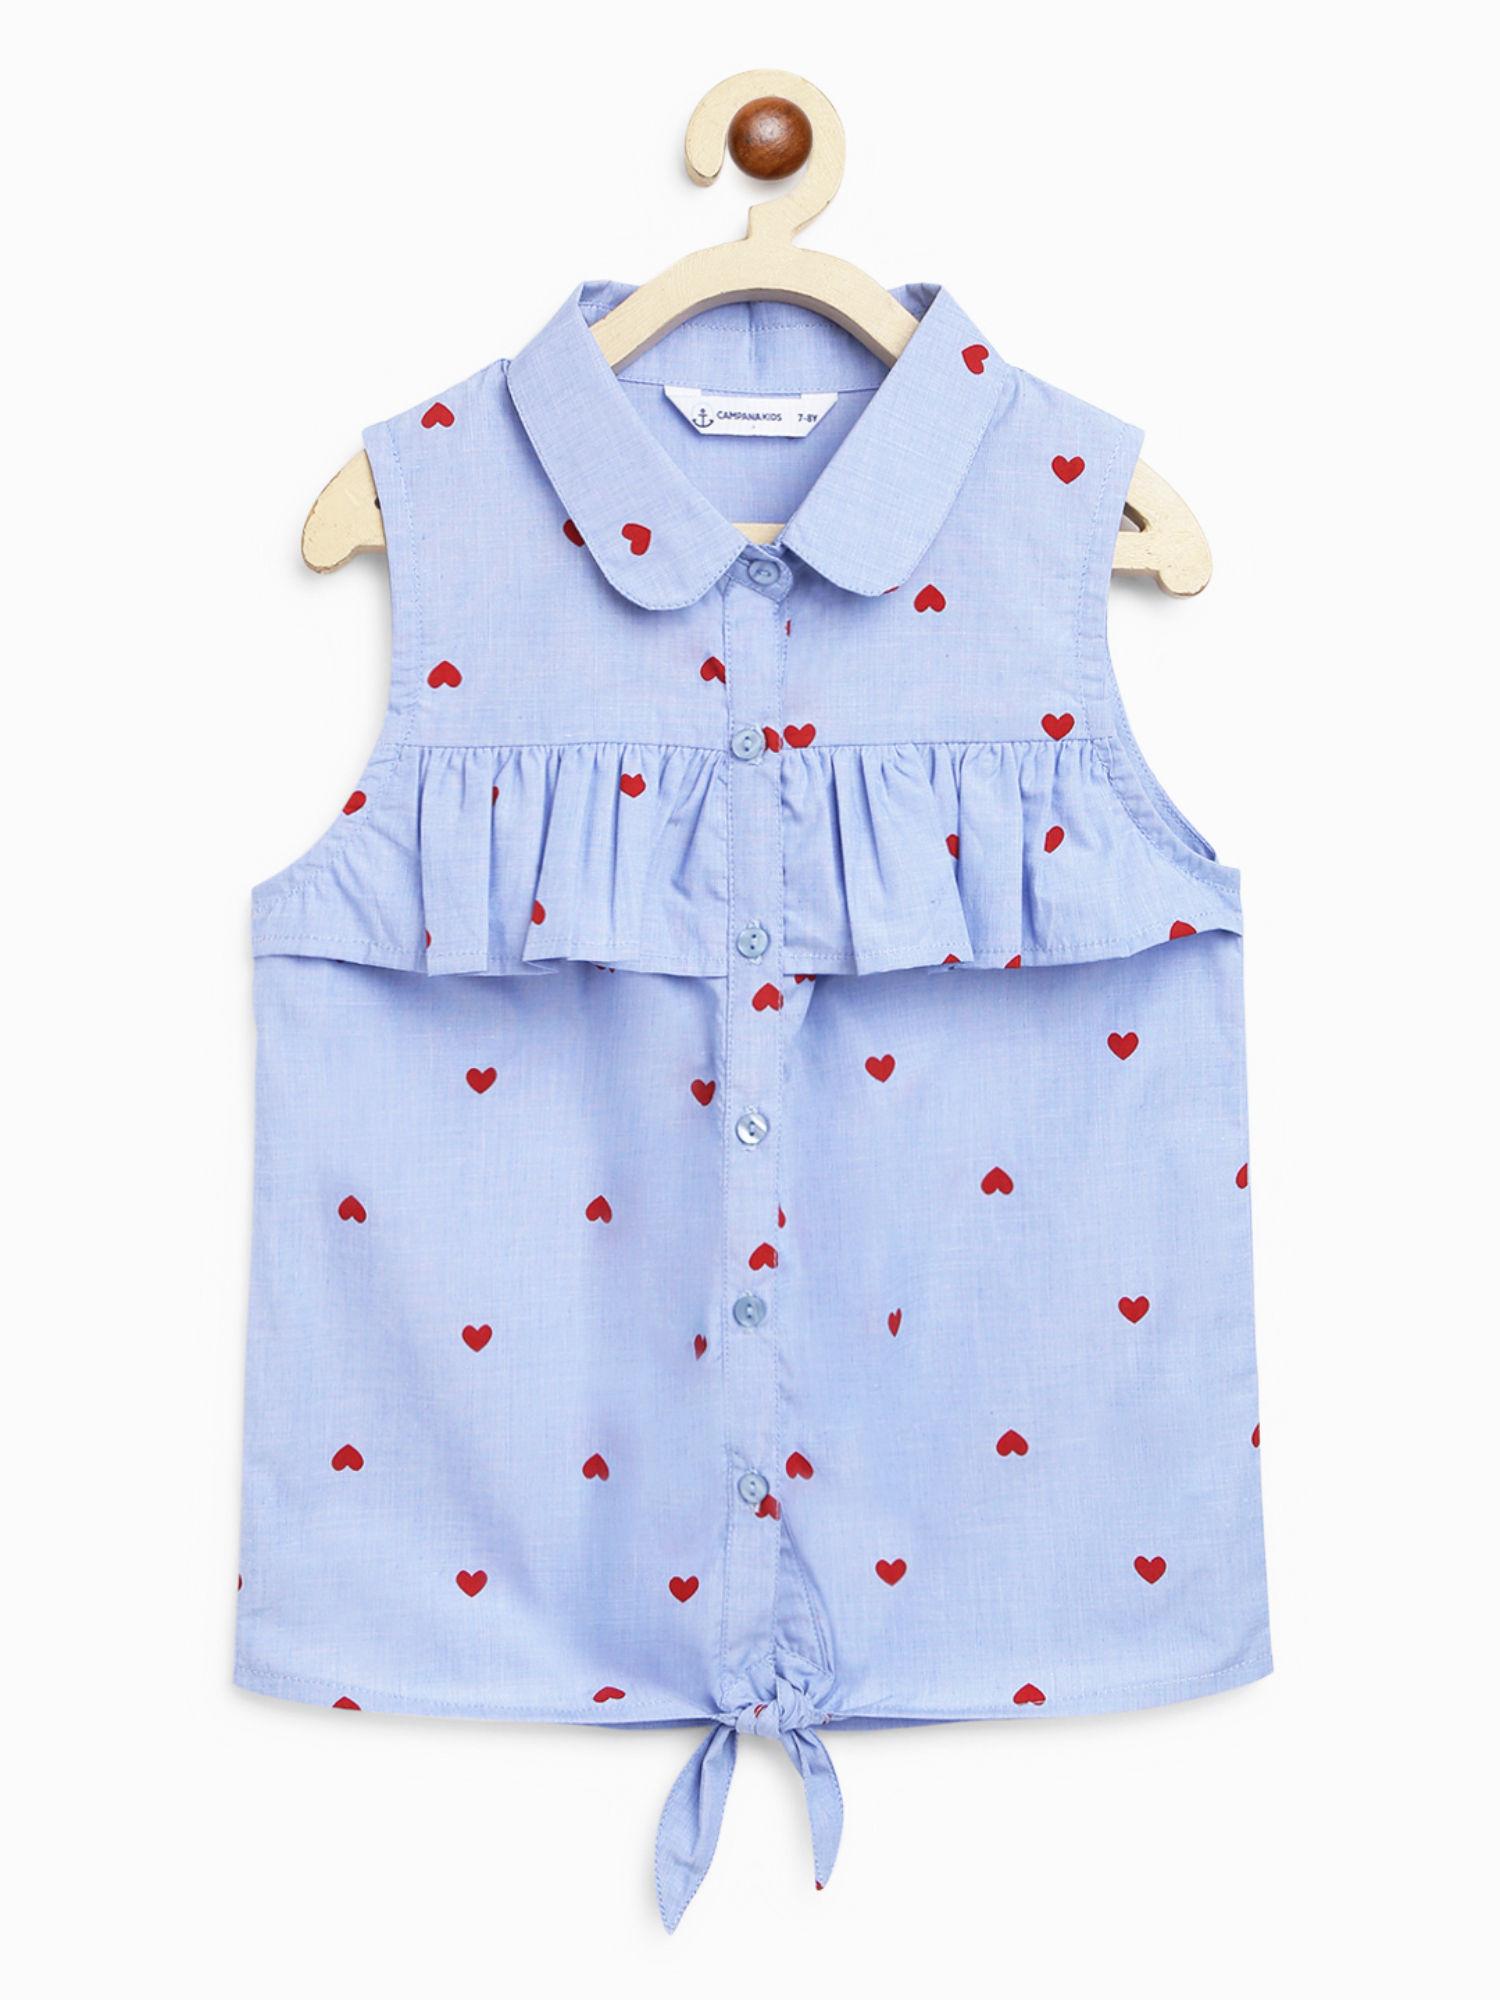 girls vickie shirt style cotton top - heart print - blue